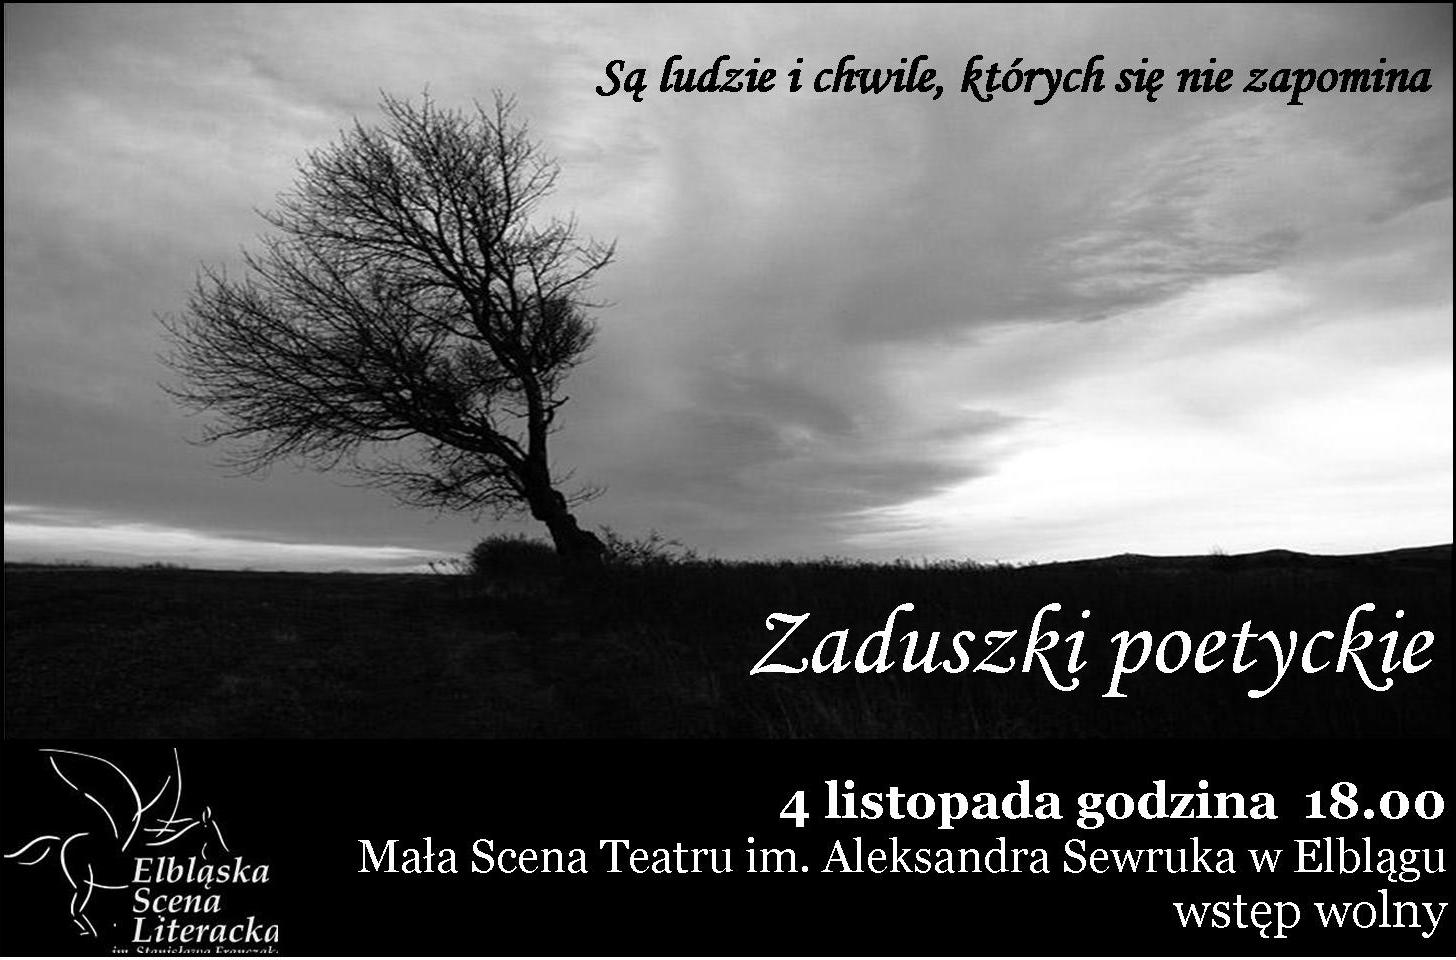 Zaduszki poetyckie - Elblska Scena Literacka